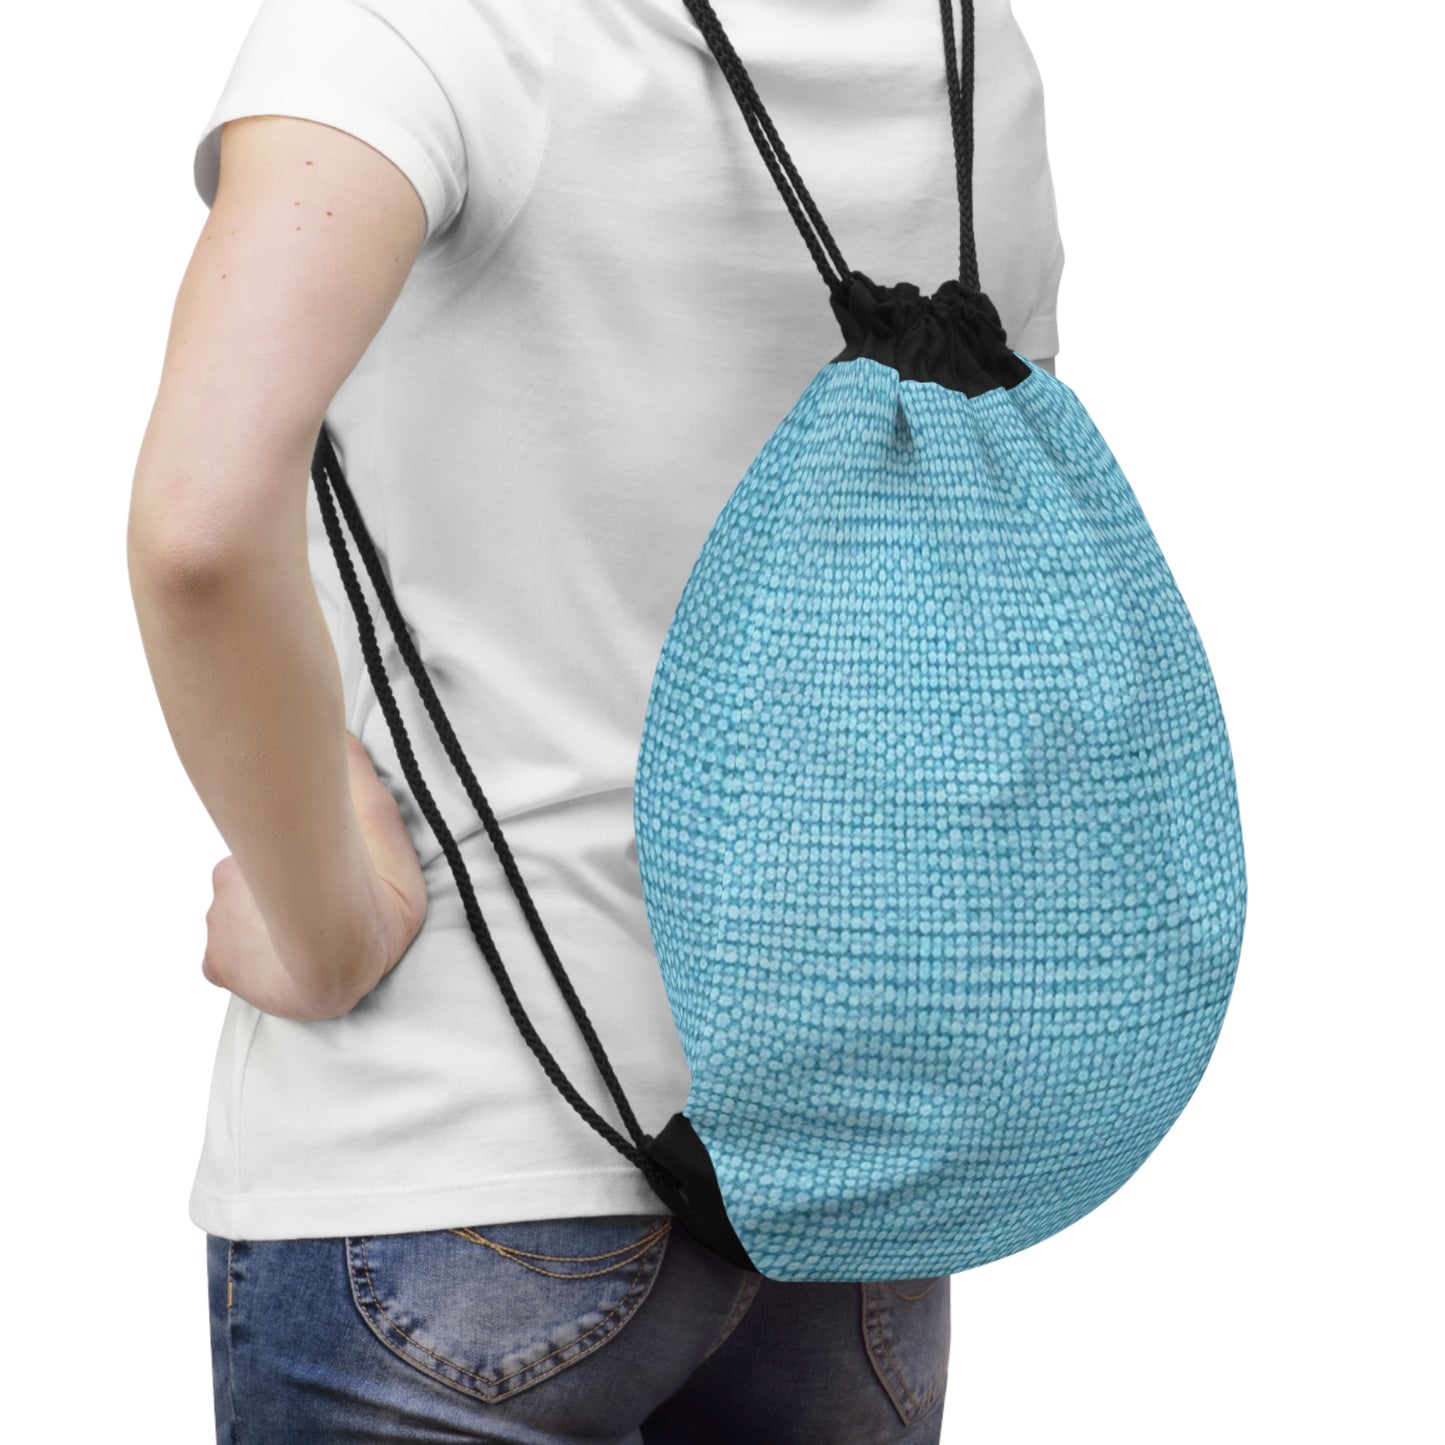 Bright Aqua Teal: Denim-Inspired Refreshing Blue Summer Fabric - Drawstring Bag